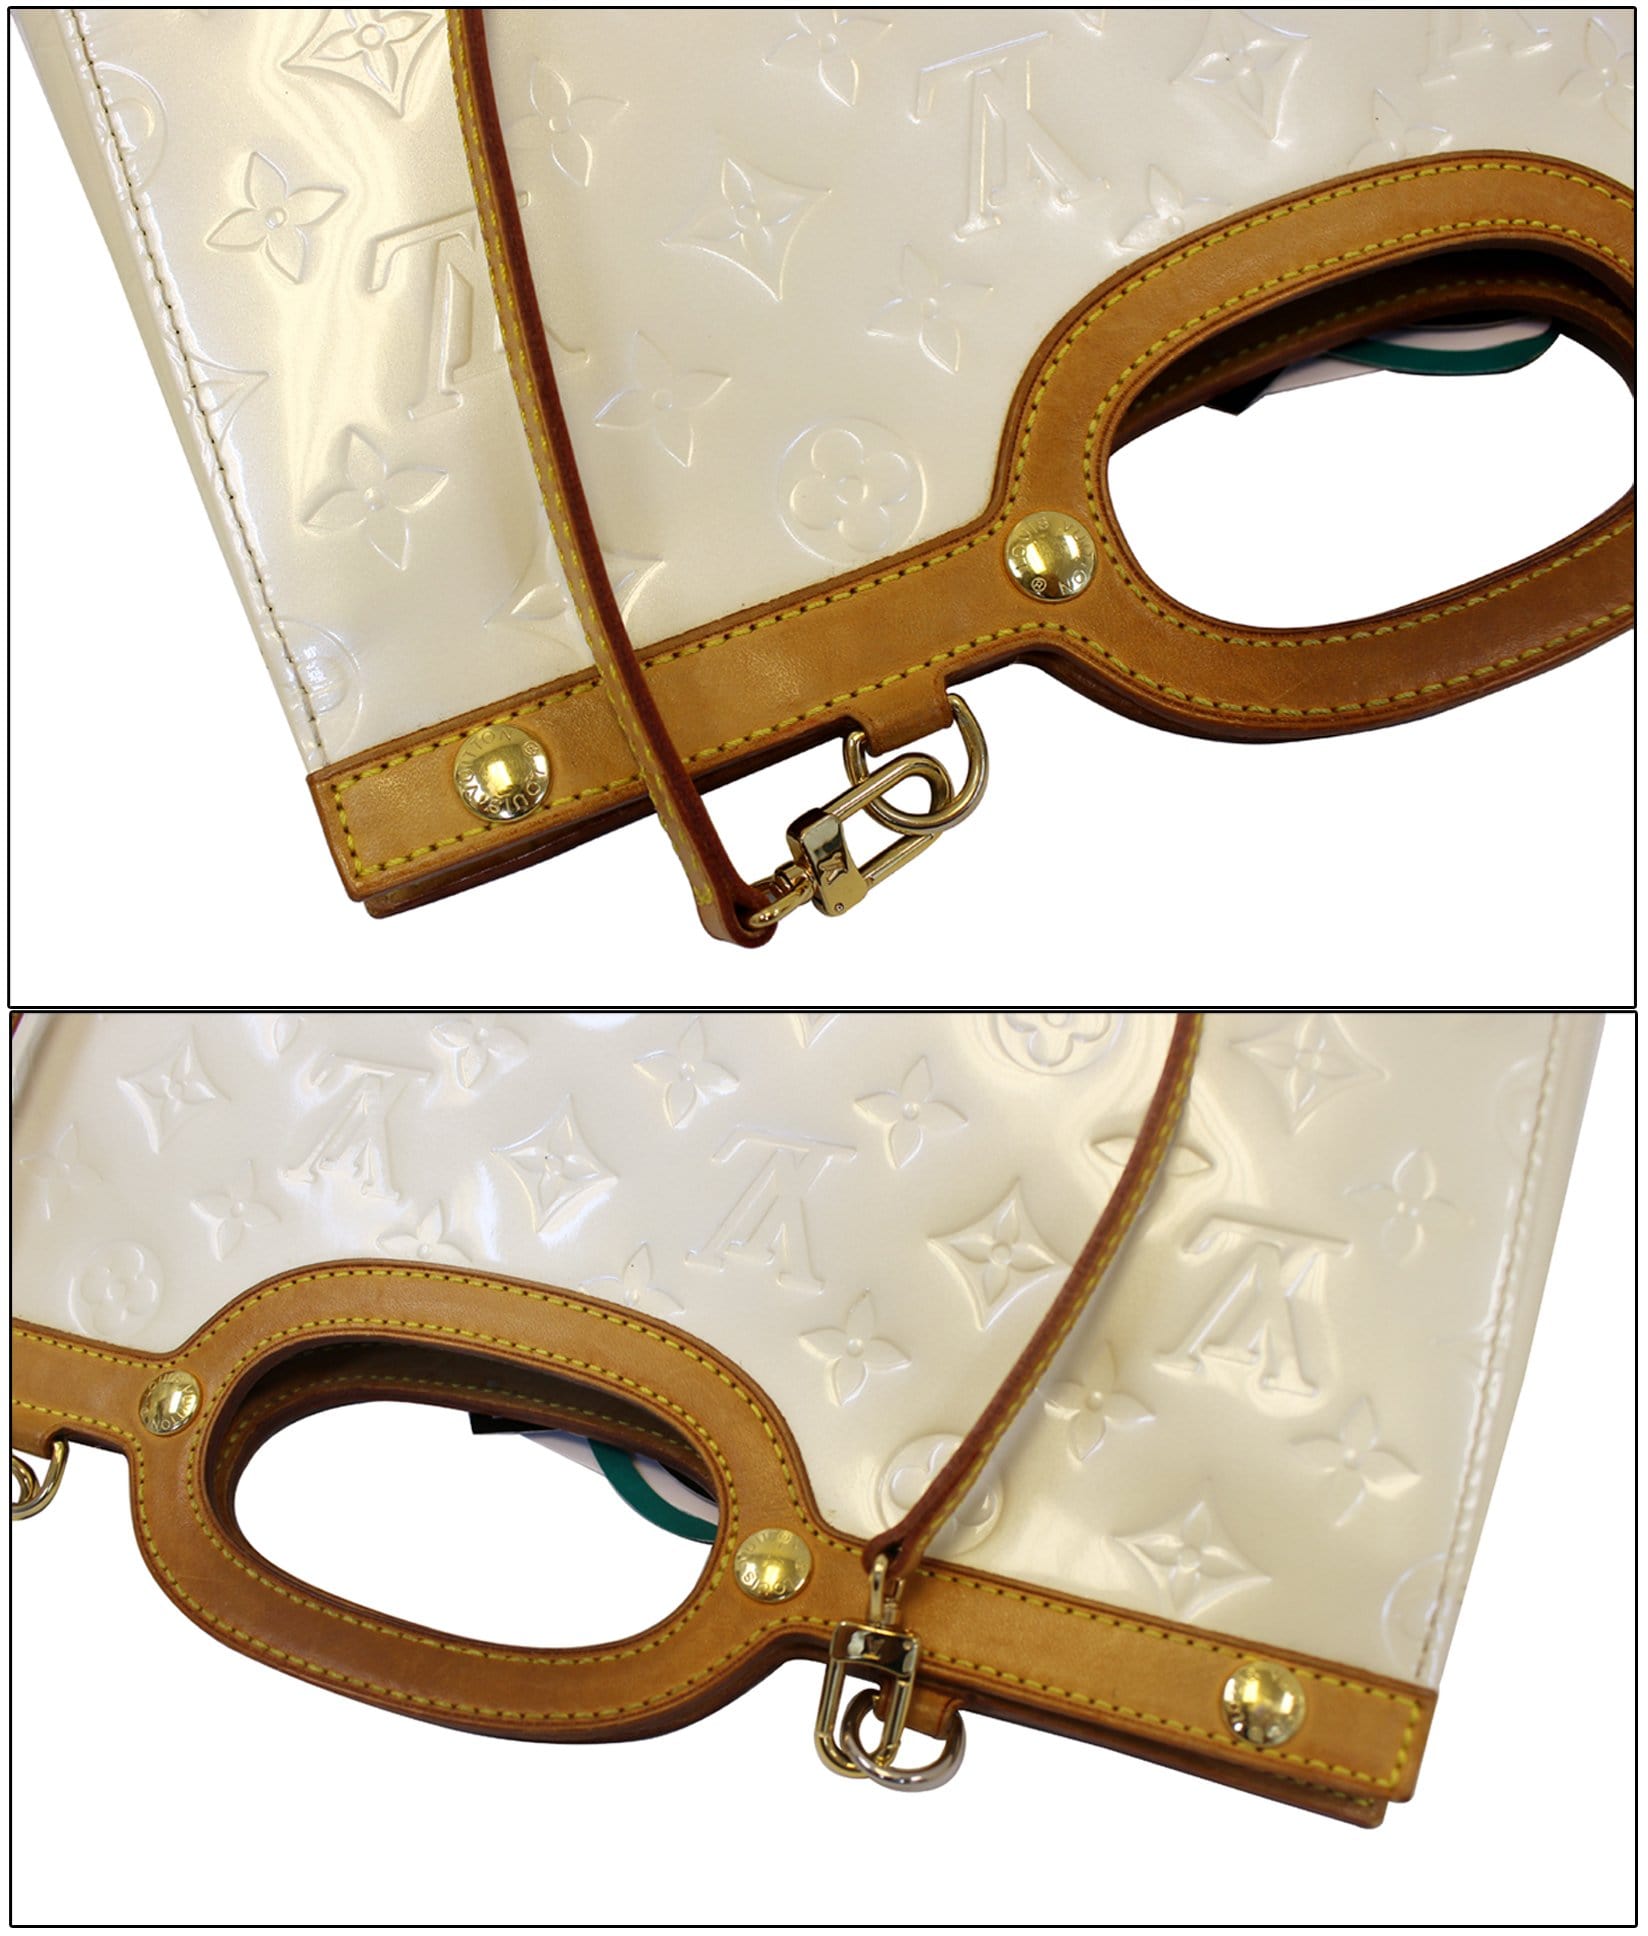 Louis Vuitton Perle Monogram Vernis Roxbury Drive Bag with Strap